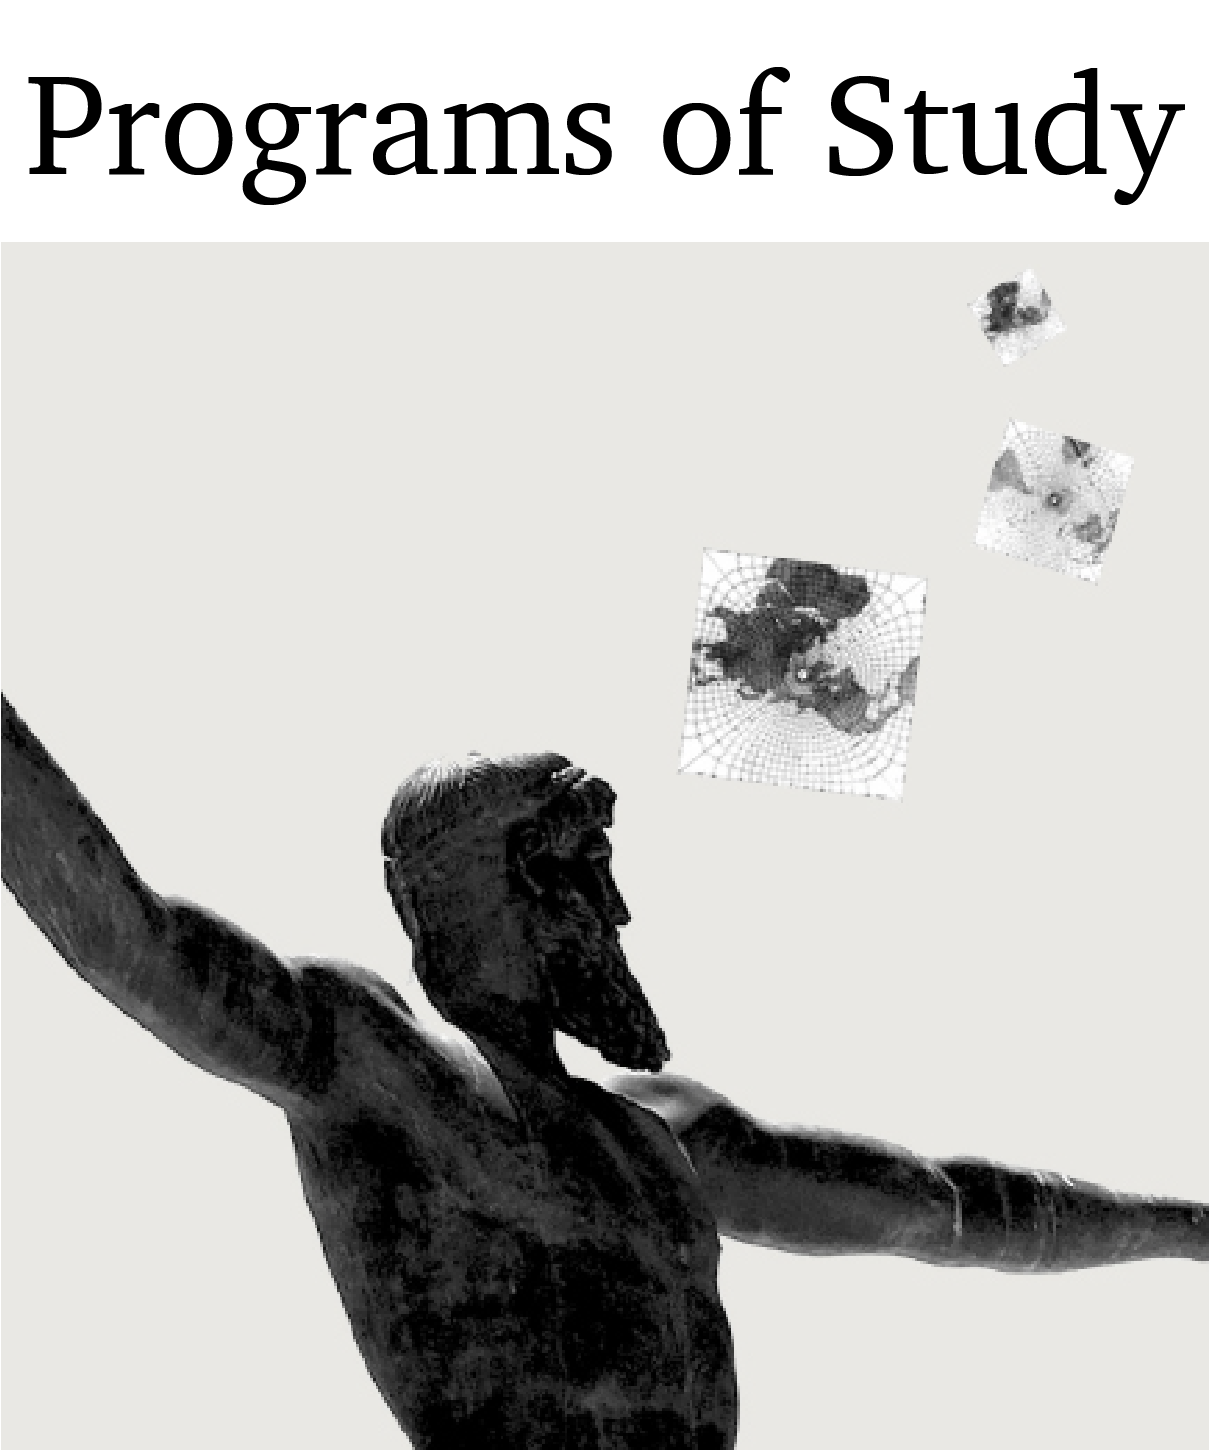 Study Programs